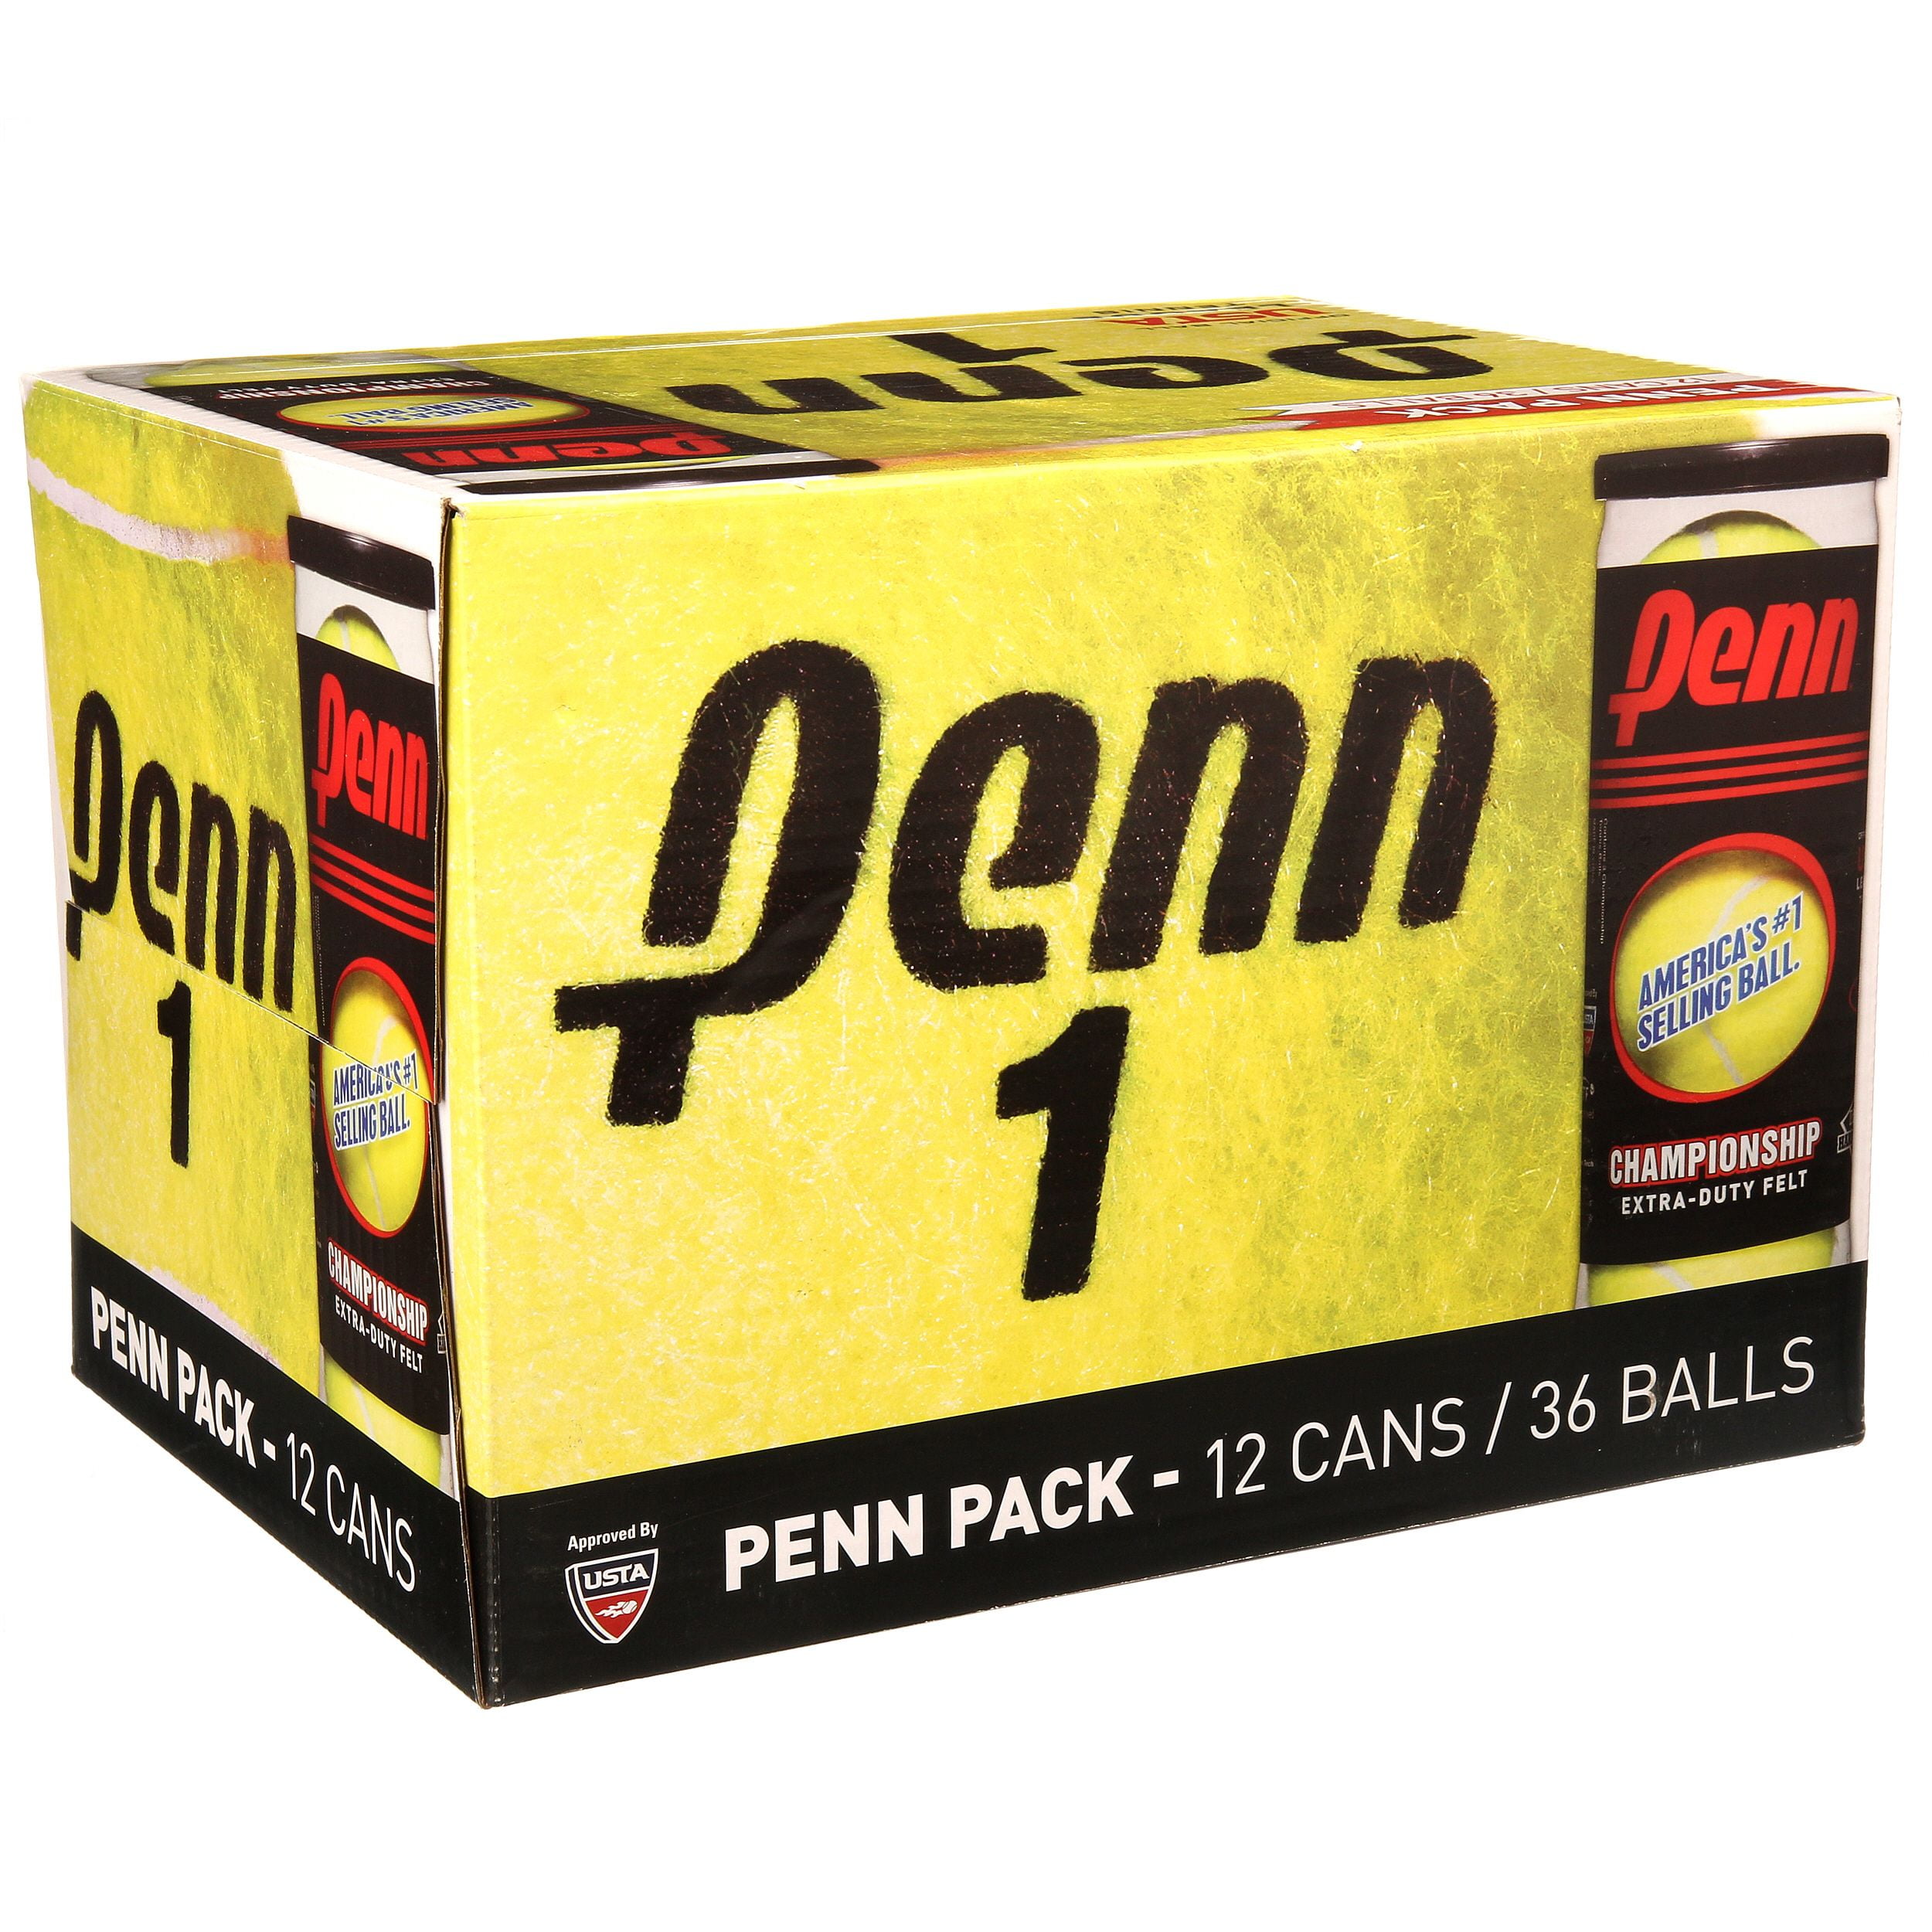 free shipment Penn Championship Extra Duty Tennis Balls- case of 60 pcs 